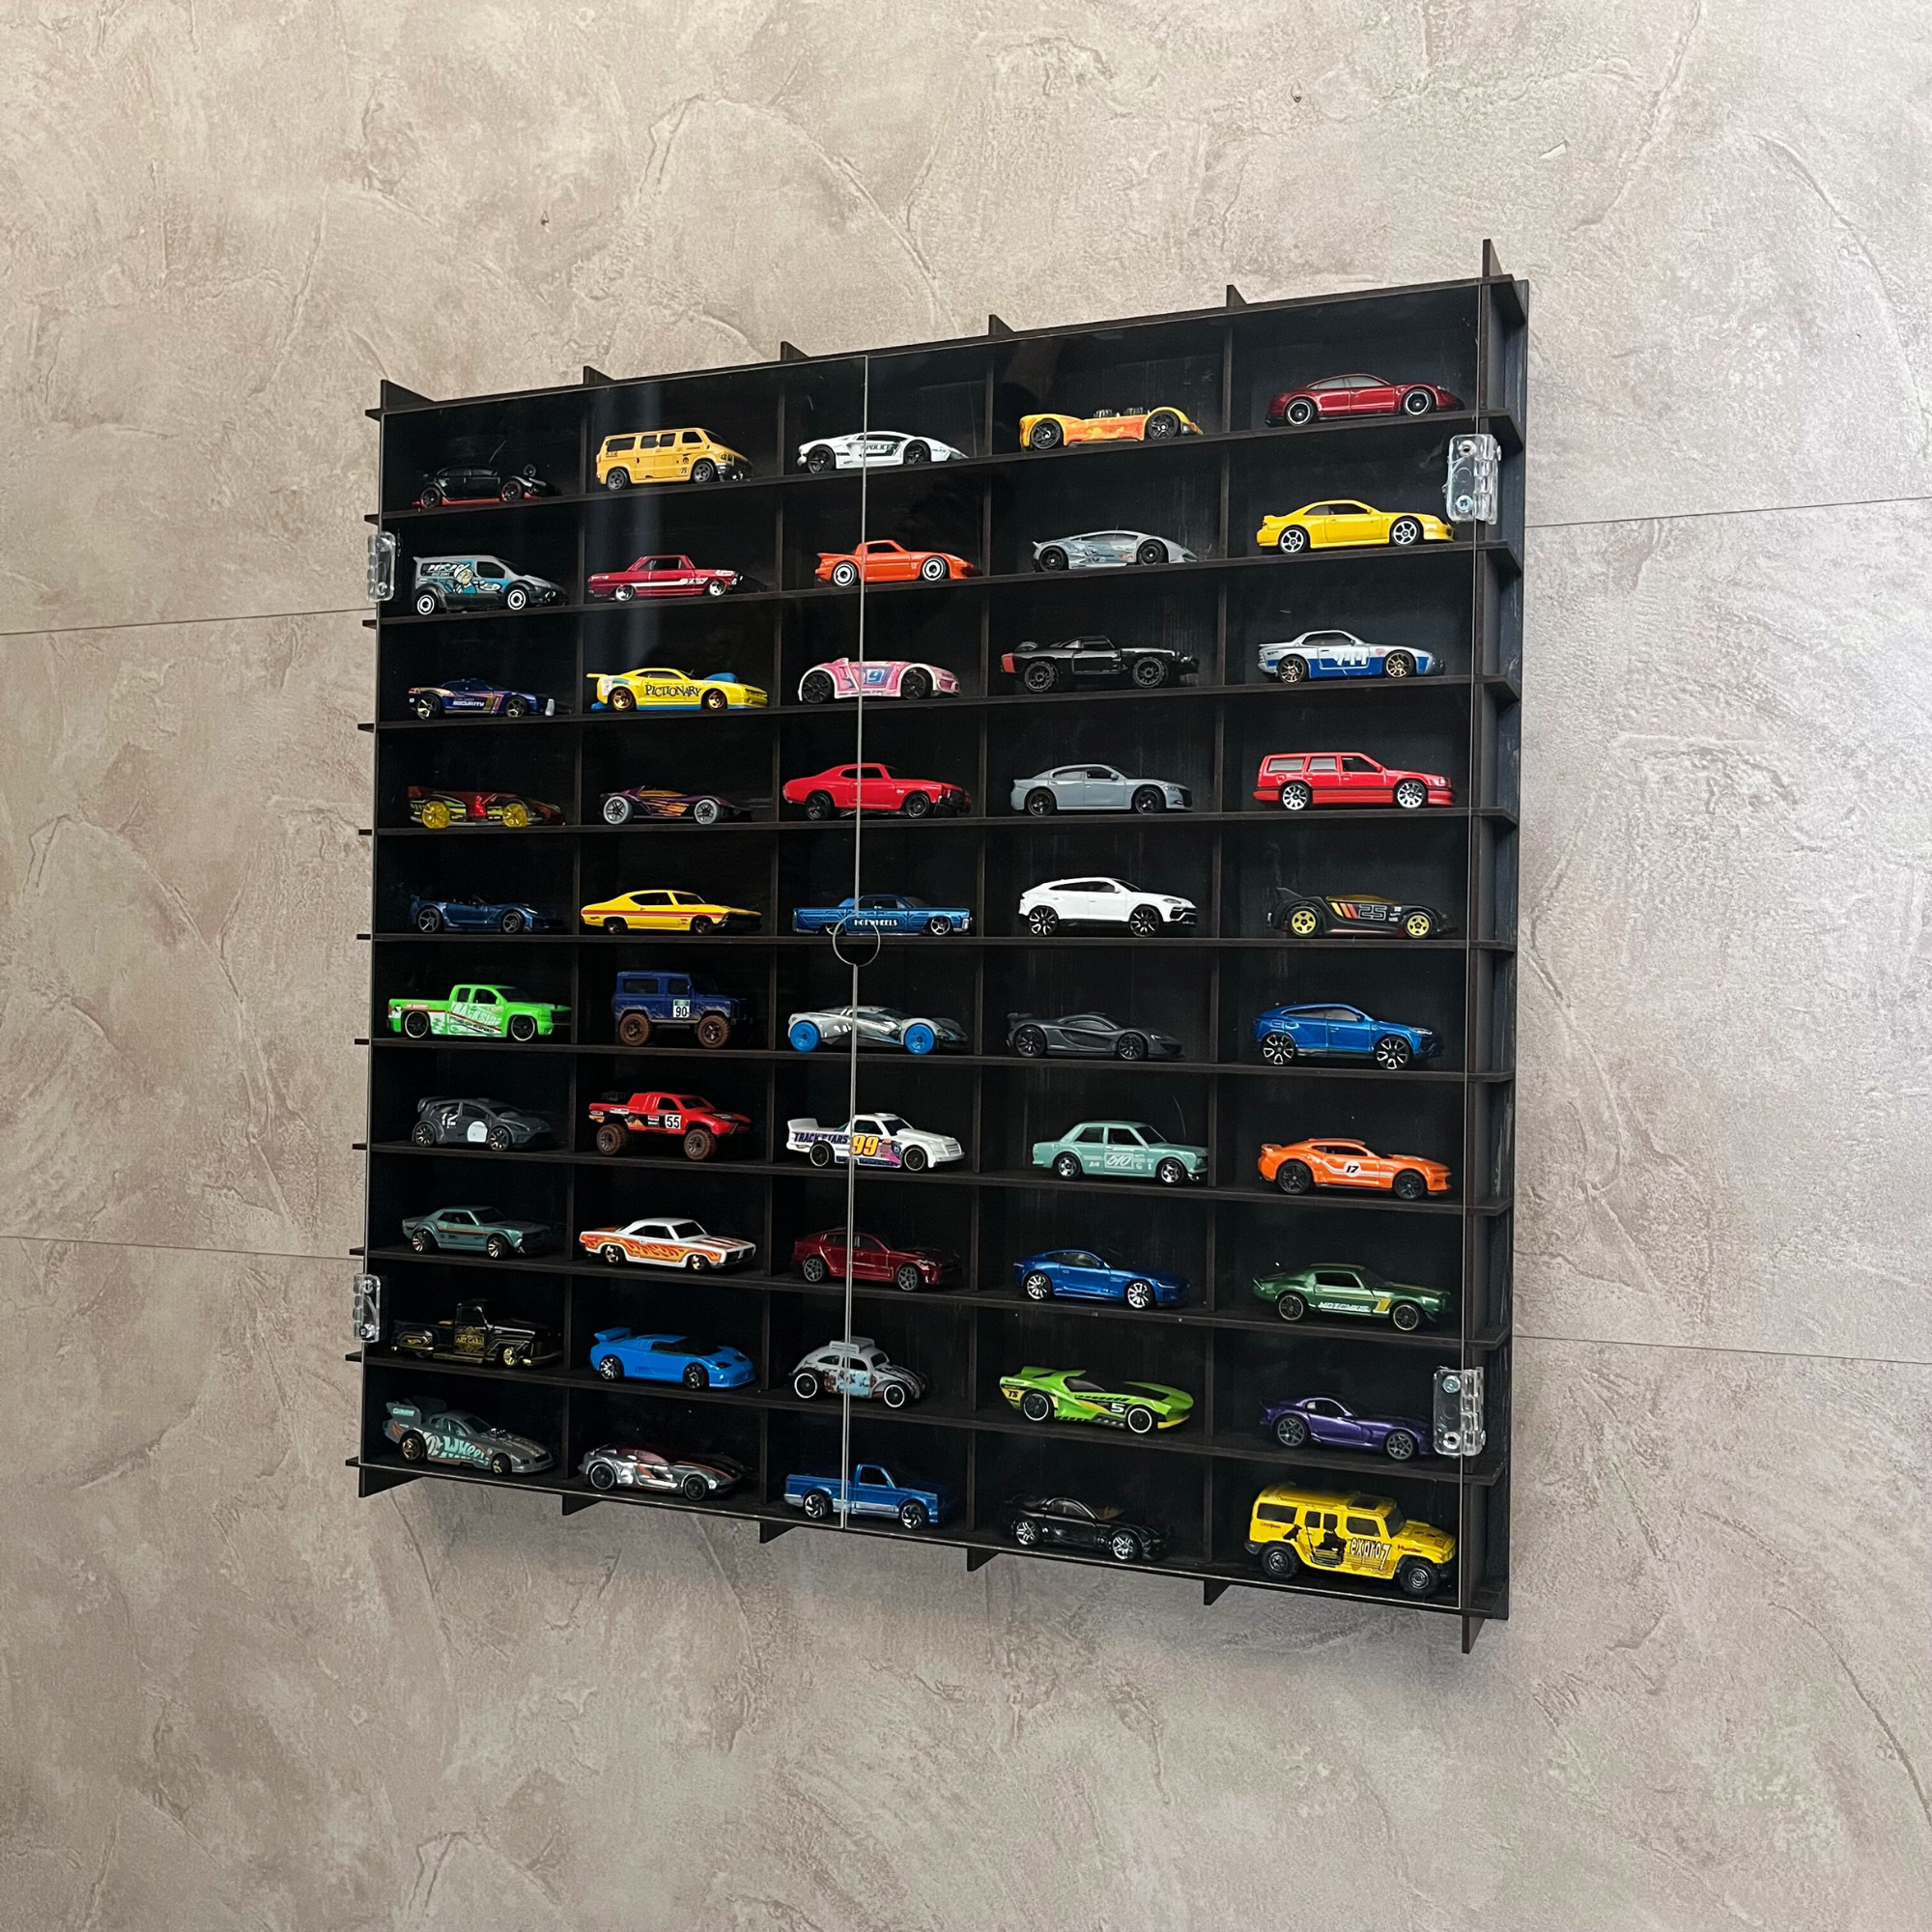 OLD BLACK Toy Car Display Case